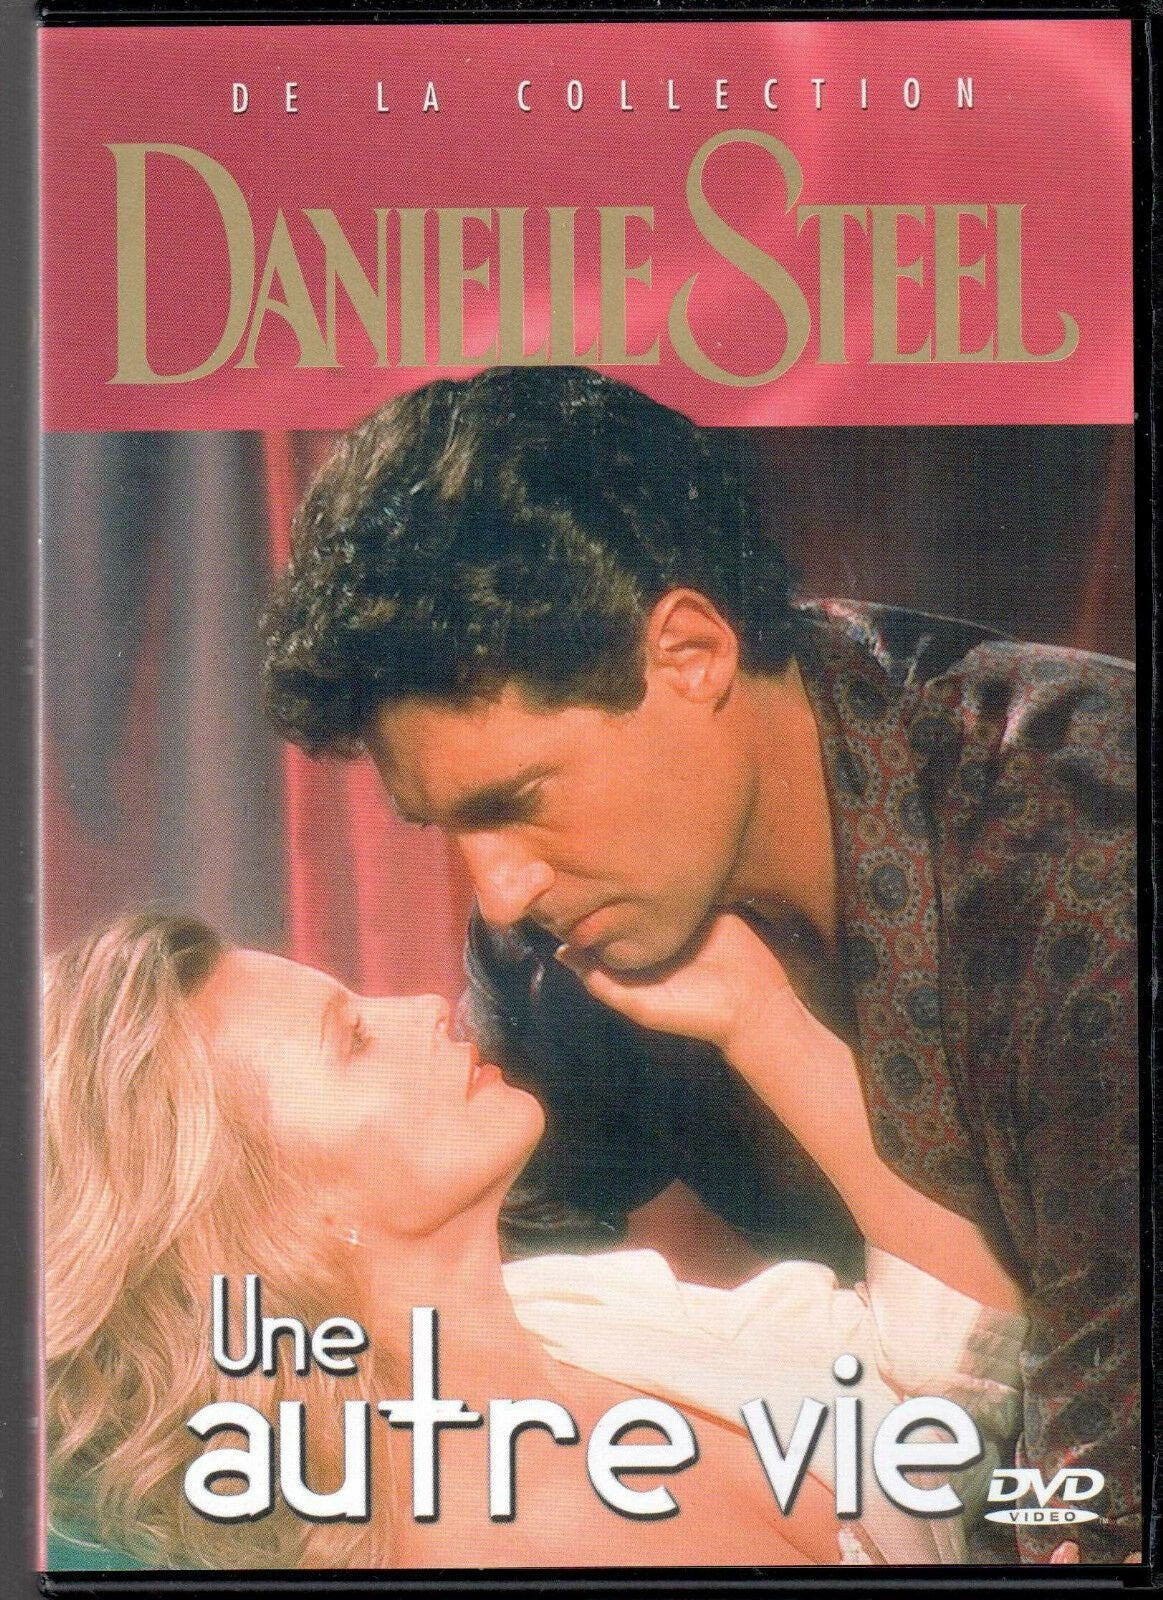 flashvideofilm - Une autre vie ( 2002 ) DVD Collection Danielle steel - DVD